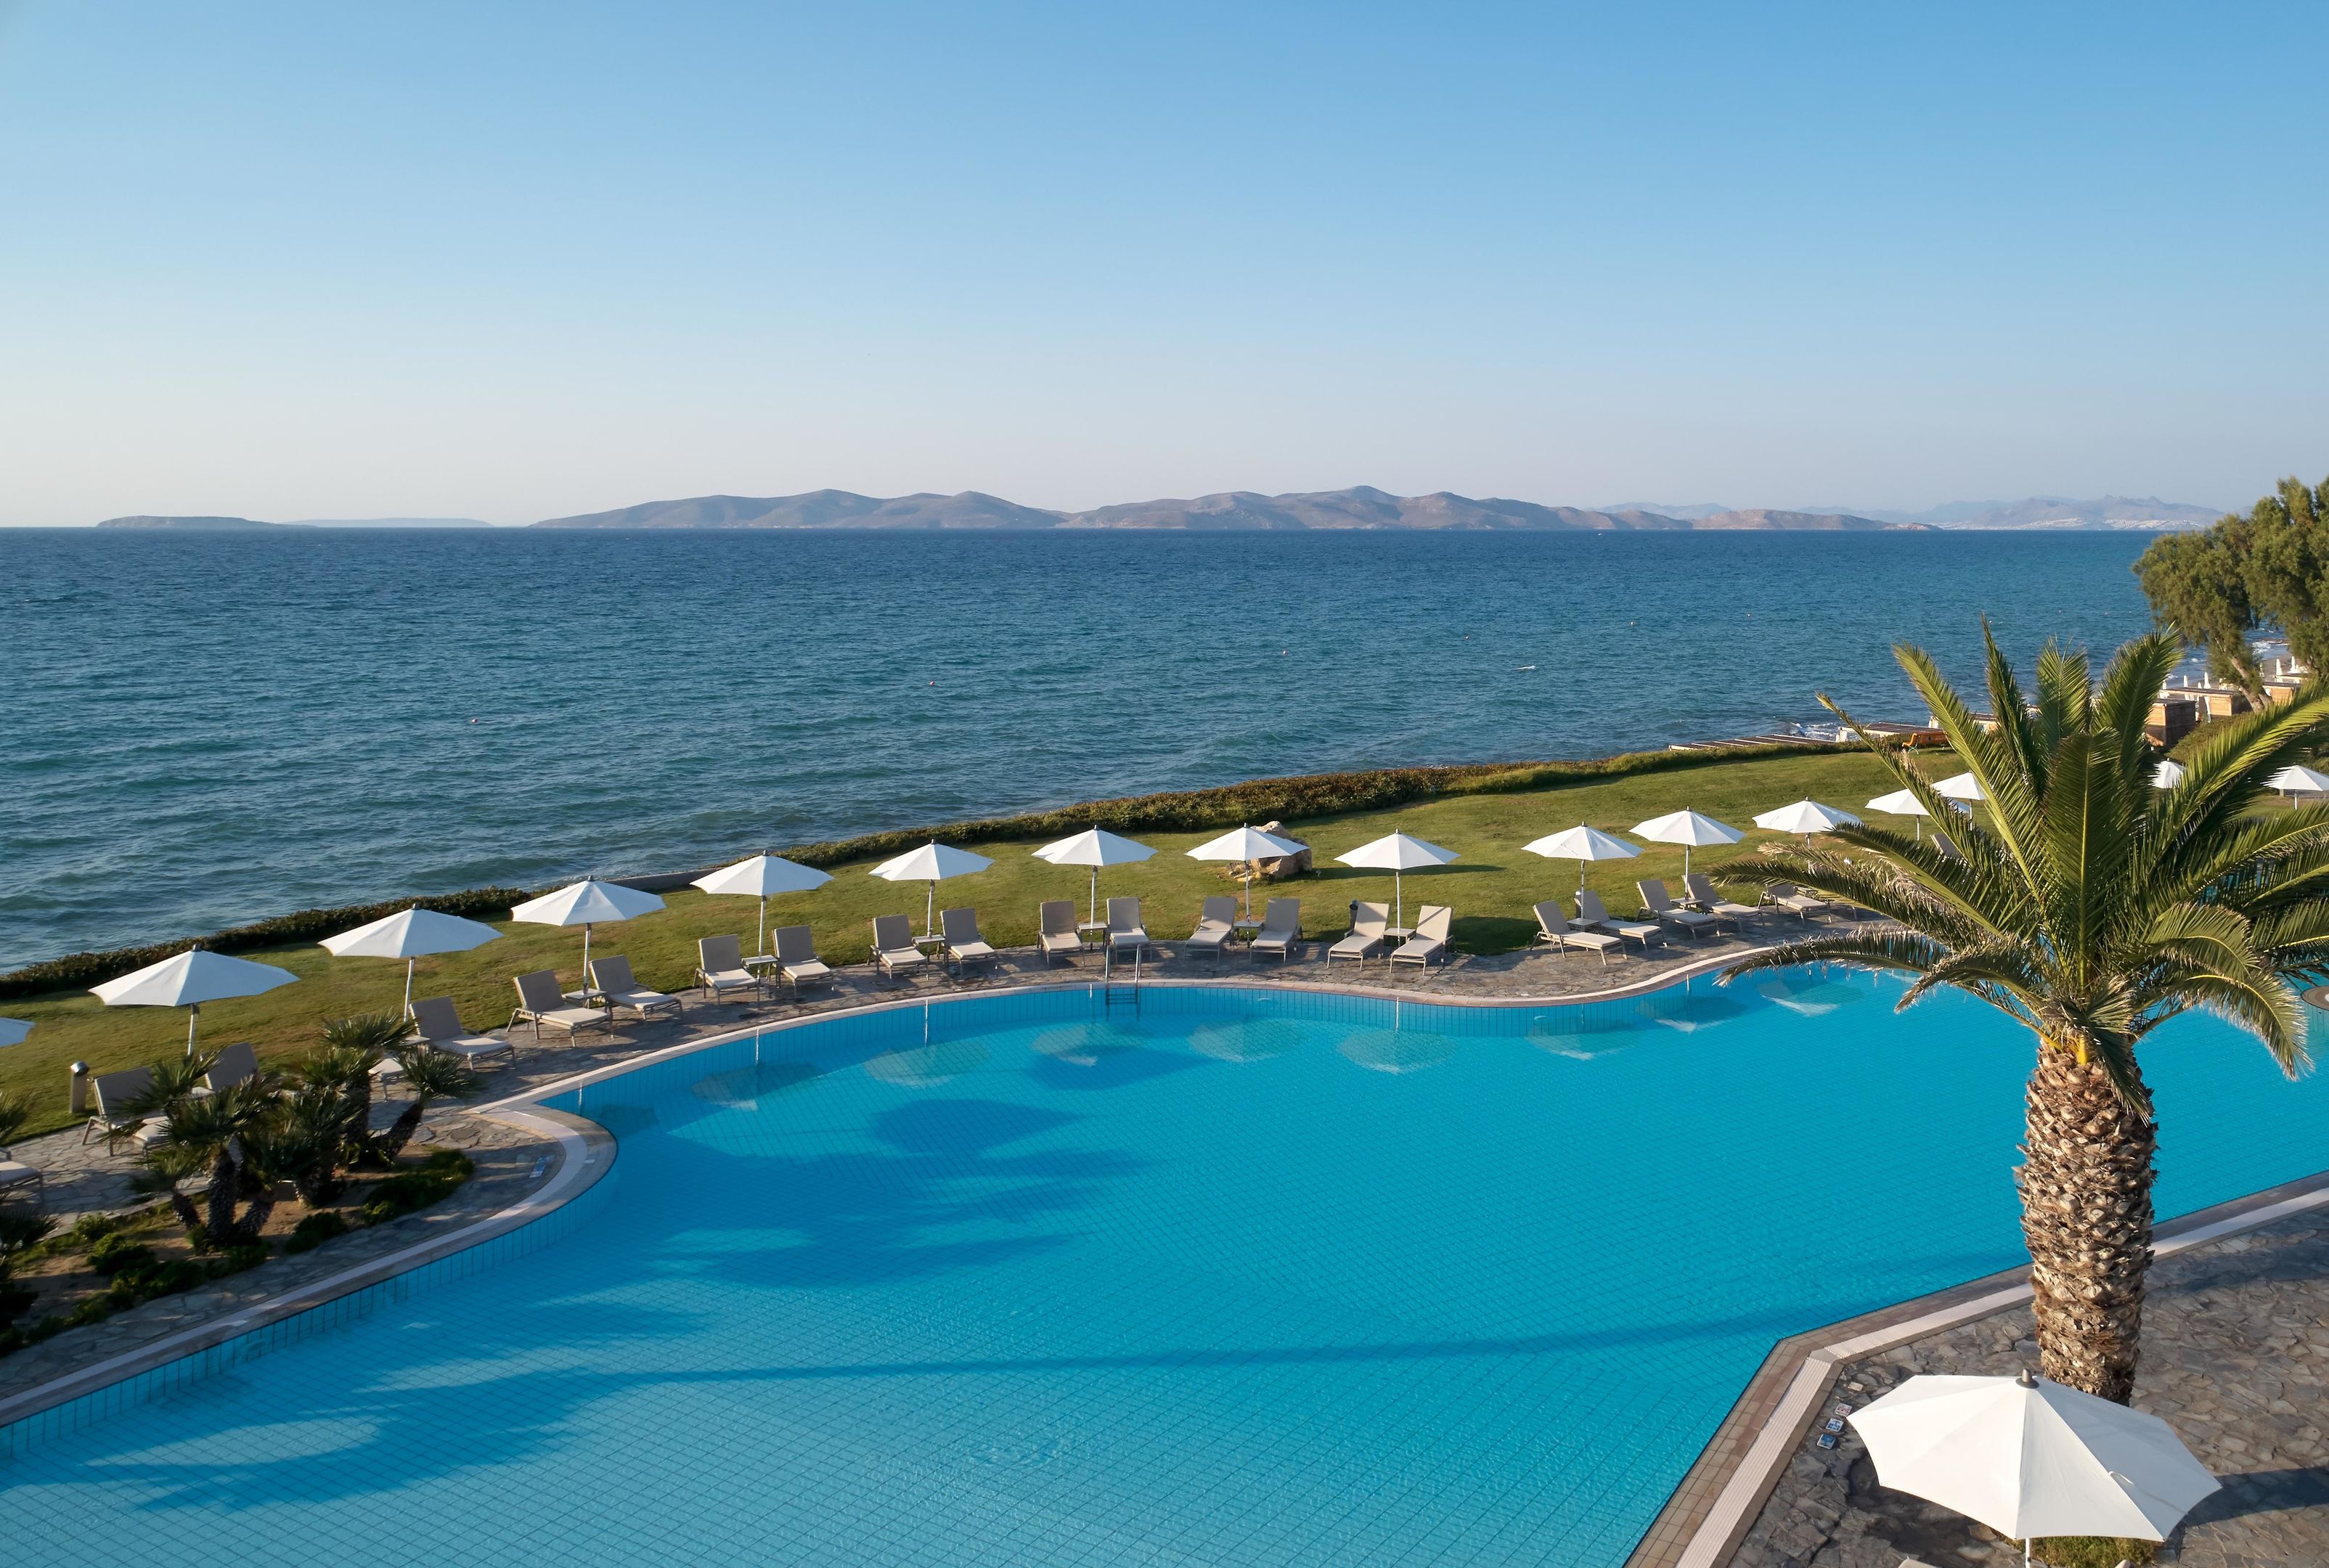 Neptune Hotels Resort, Convention Centre & Spa